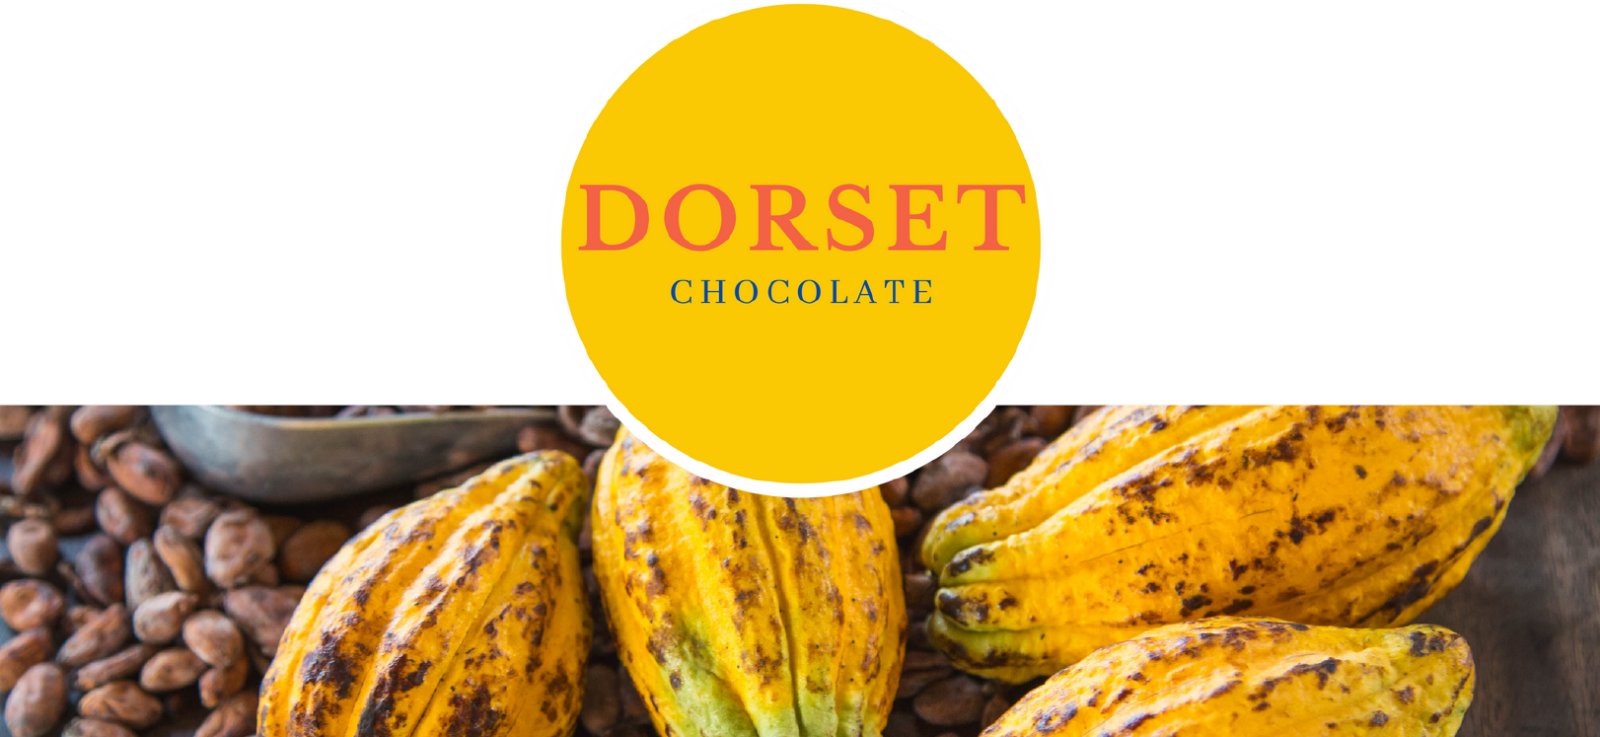 Dorset Chocoalte